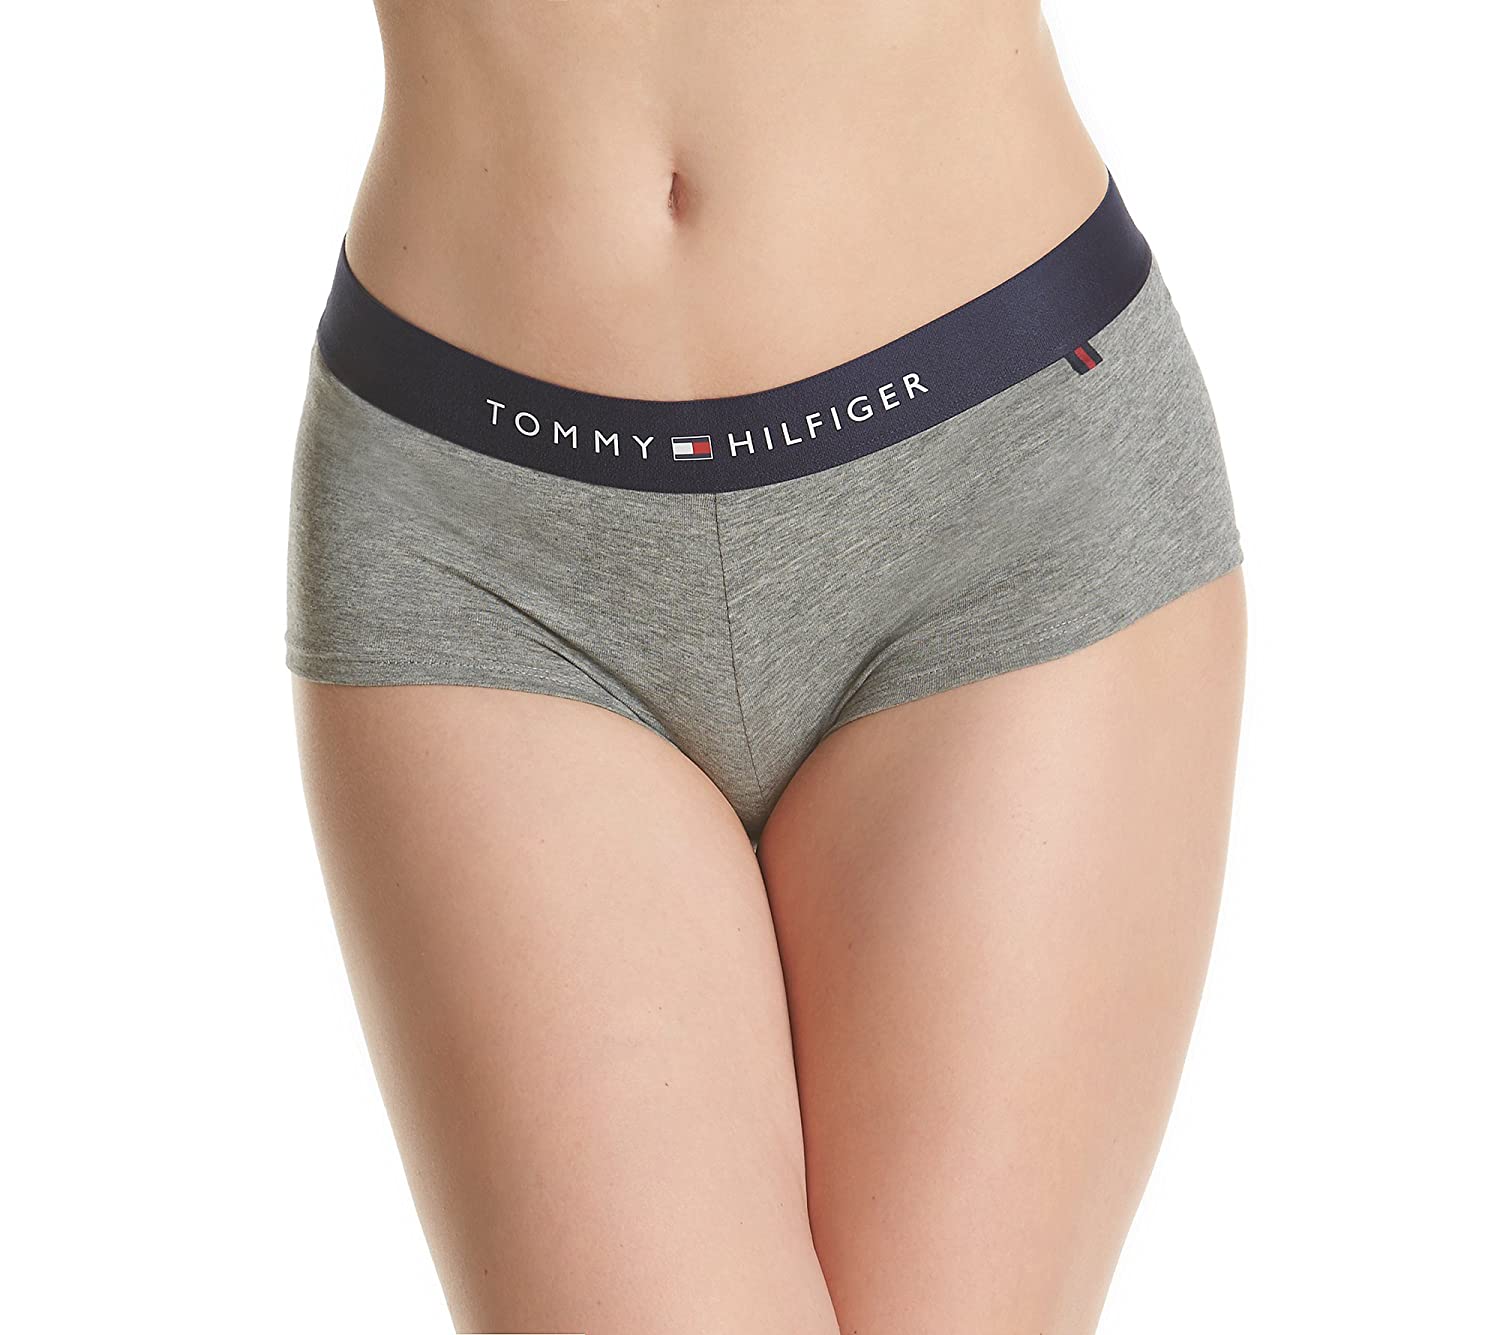 Price:$18.00 Tommy Hilfiger Women's Underwear Cotton Boyshort Panty, Single & Multipacks, Grey Heather Logo-Single, Medium at Amazon Women’s Clothing store